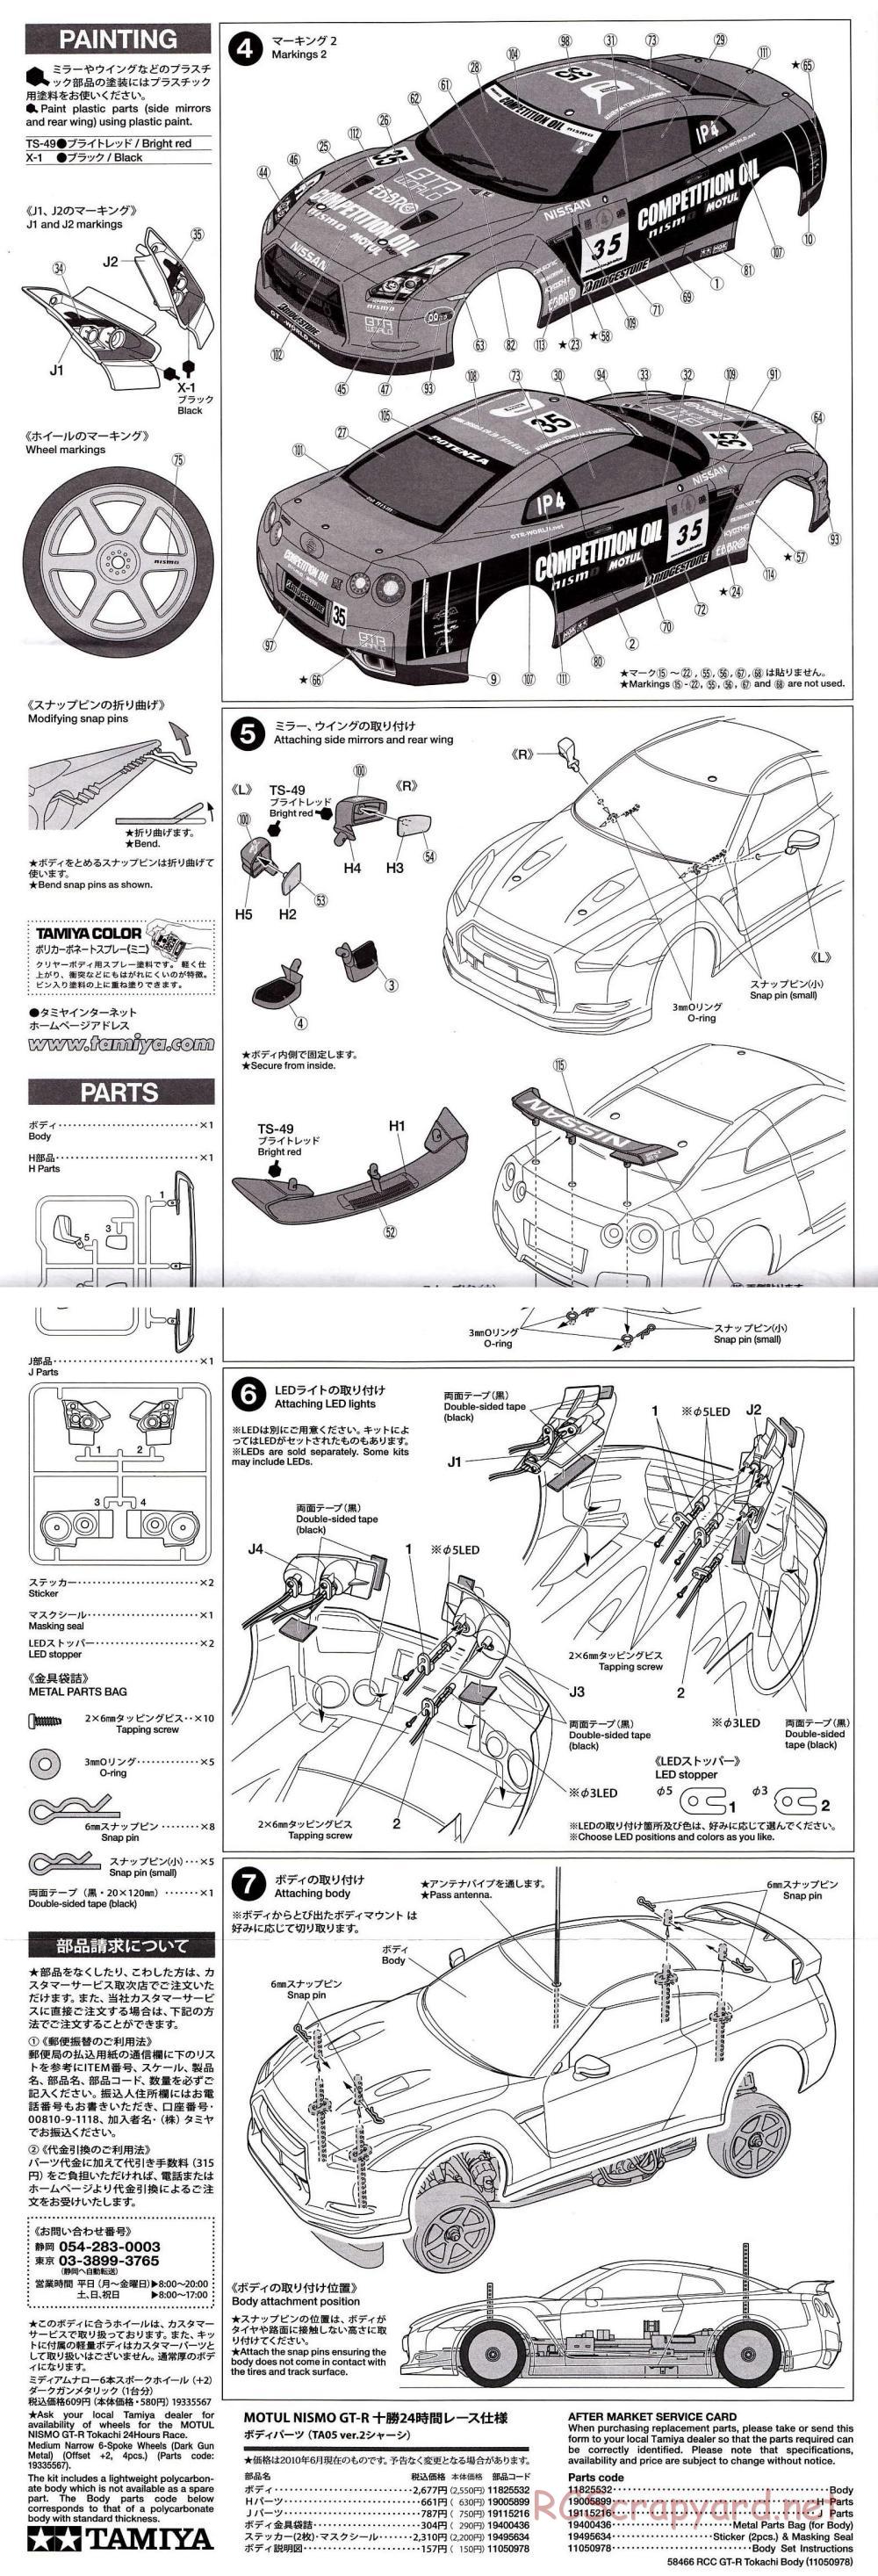 Tamiya - Motul NISMO GT-R Tokachi 24 Hours Race - TA05 Ver.II Chassis - Body Manual - Page 2